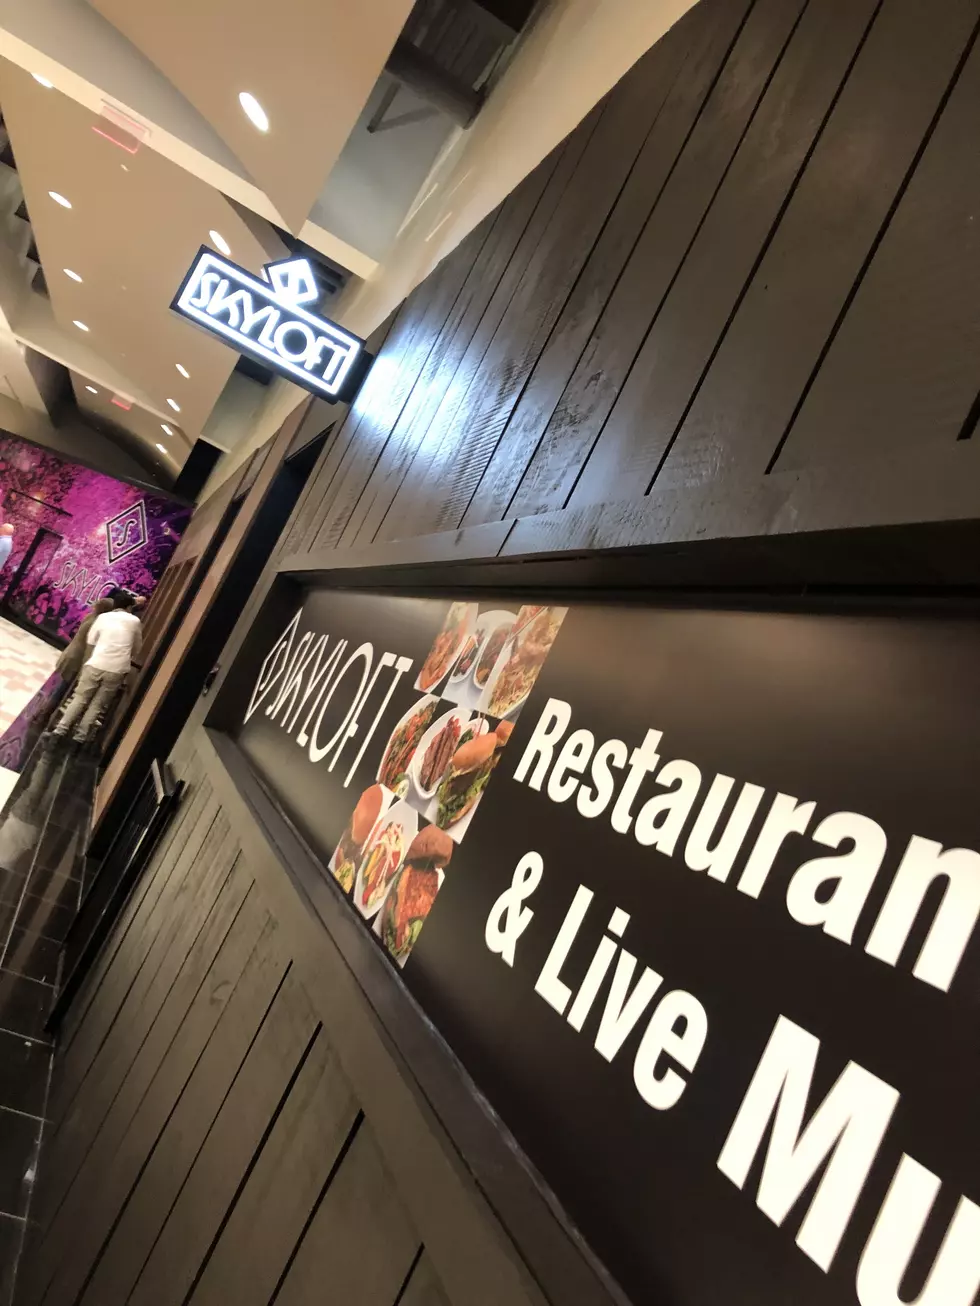 Crossgates Mall Music Venue Announces Opening